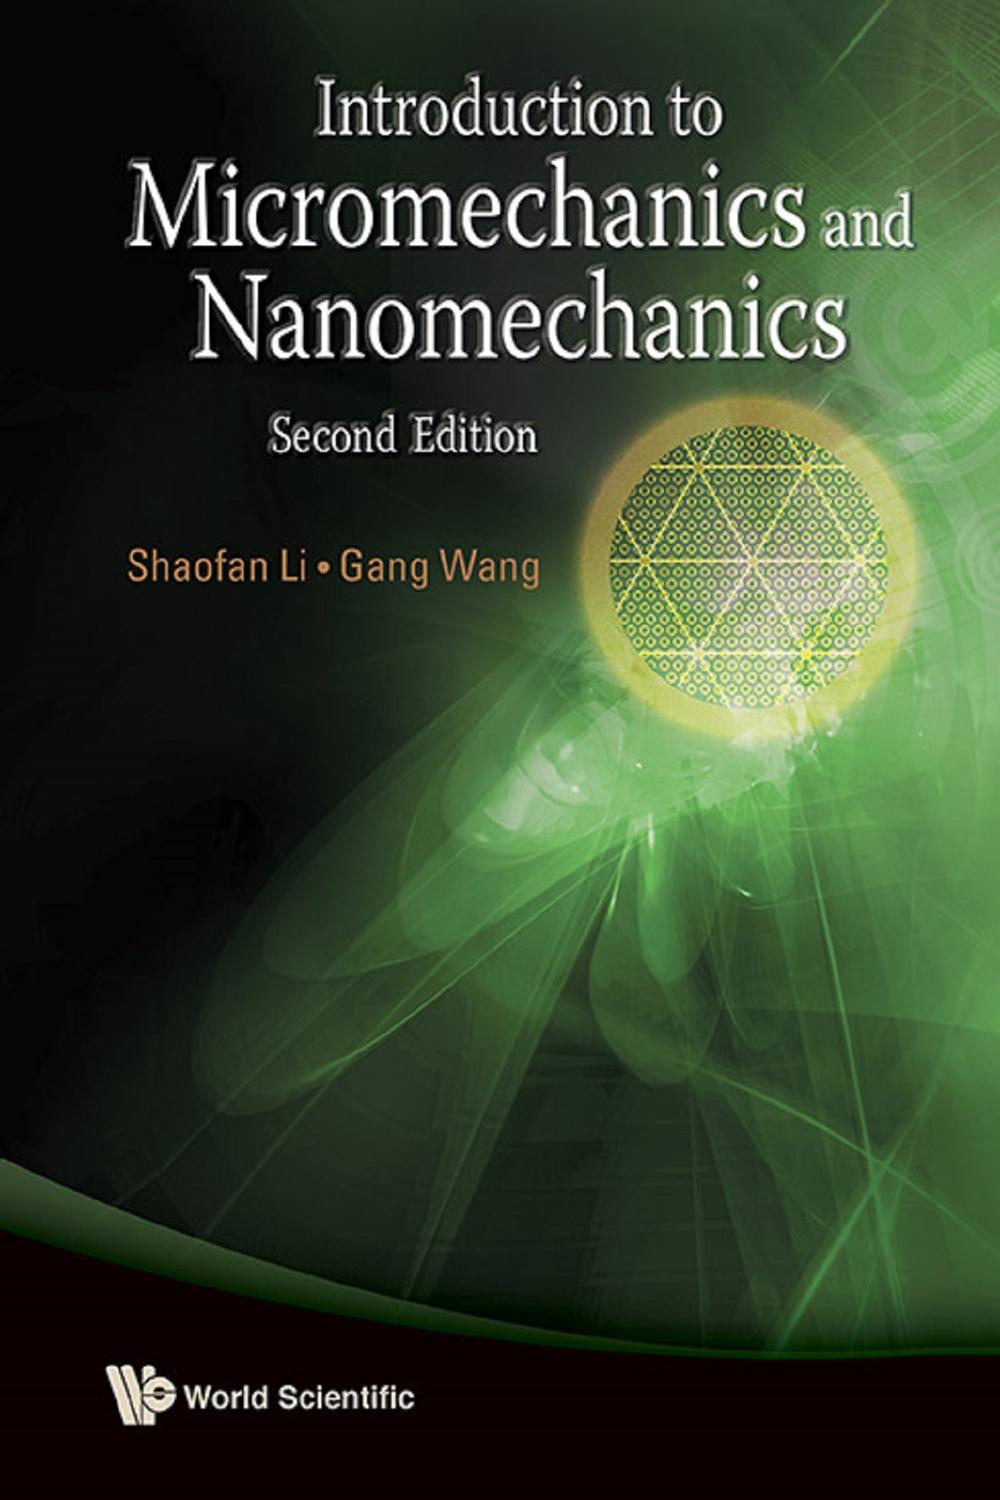 Introduction to Micromechanics and Nanomechanics - Shaofan Li, Gang Wang